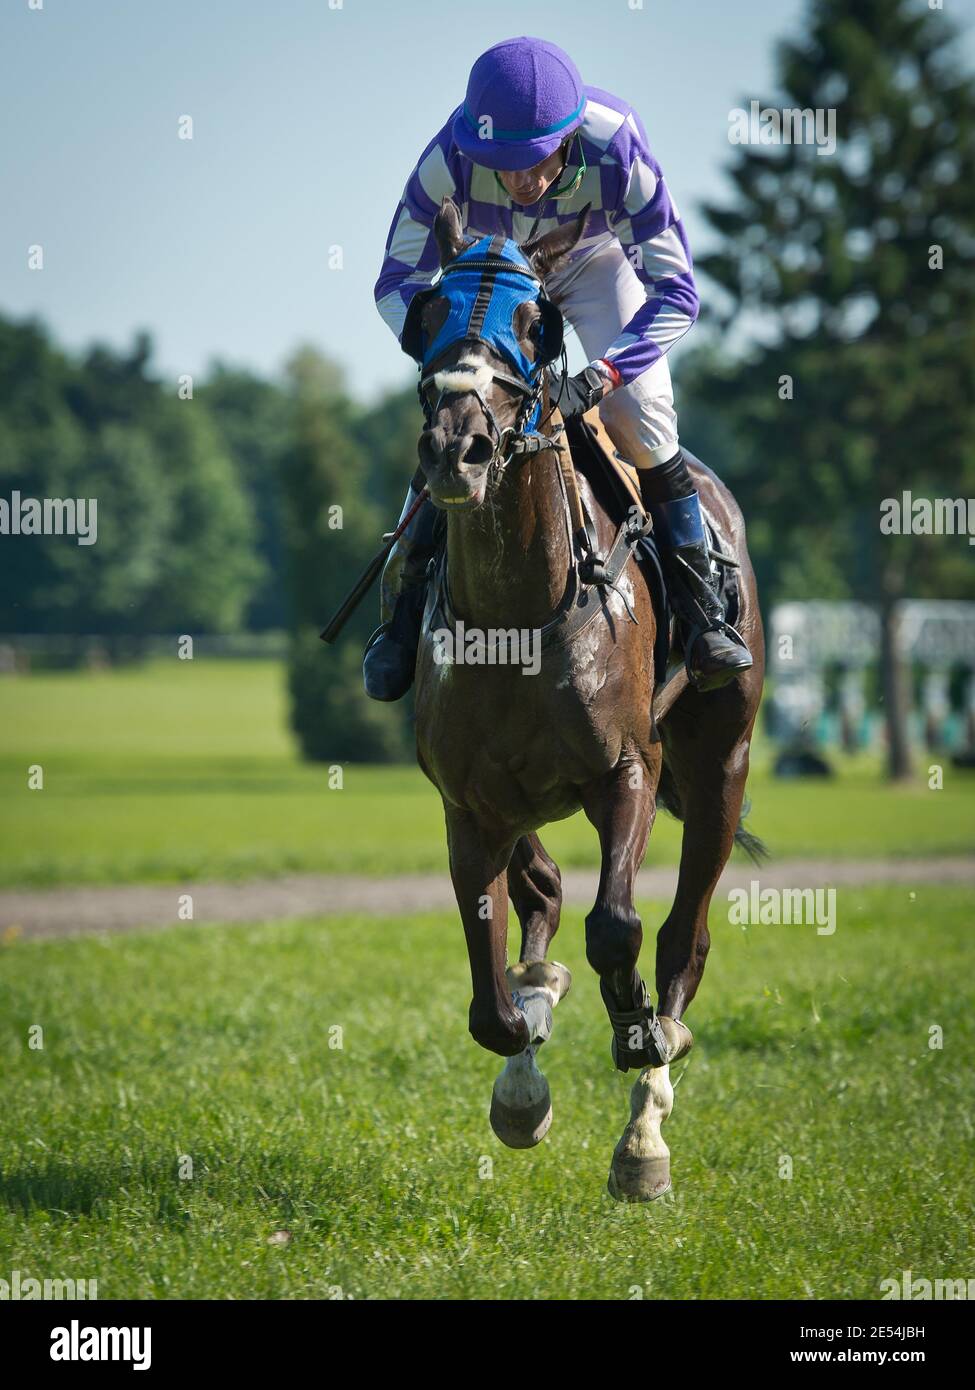 Jockey on the horse during horserace. Stock Photo